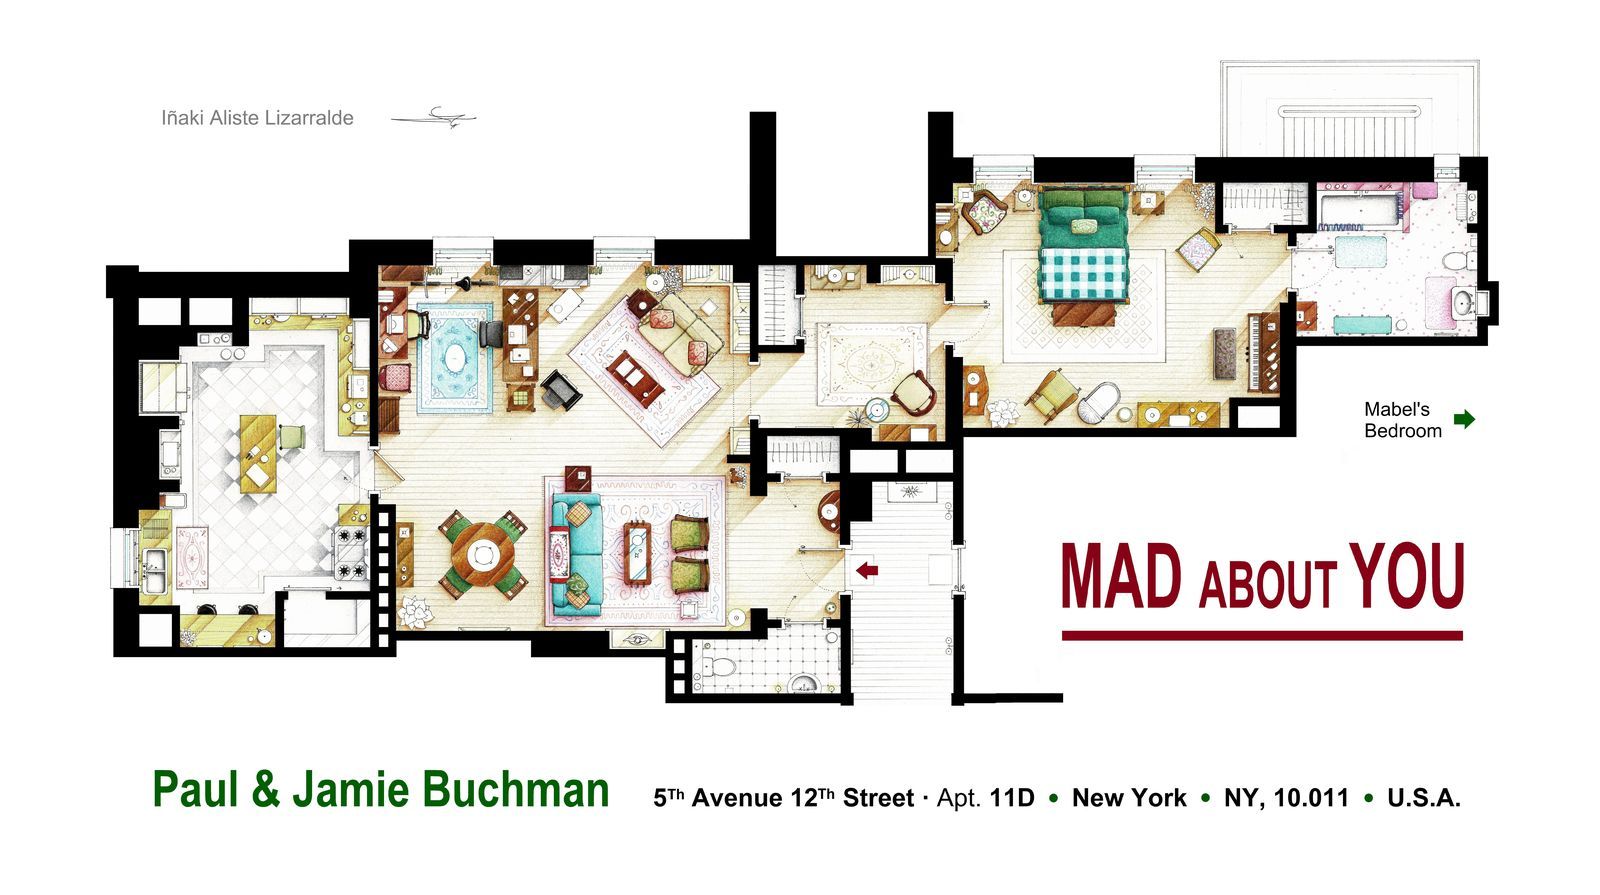 · Floorplan of Paul & Jamie Buchman's apartment from the